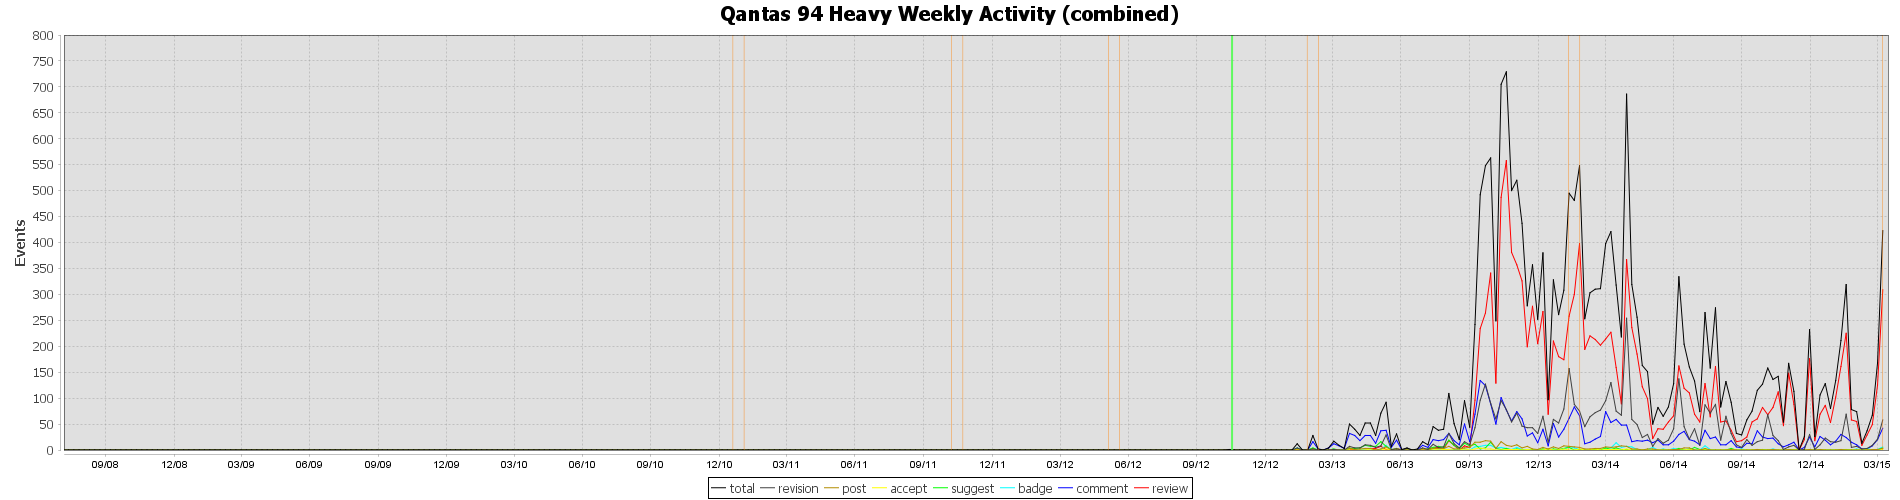 Qantas 94 Heavy